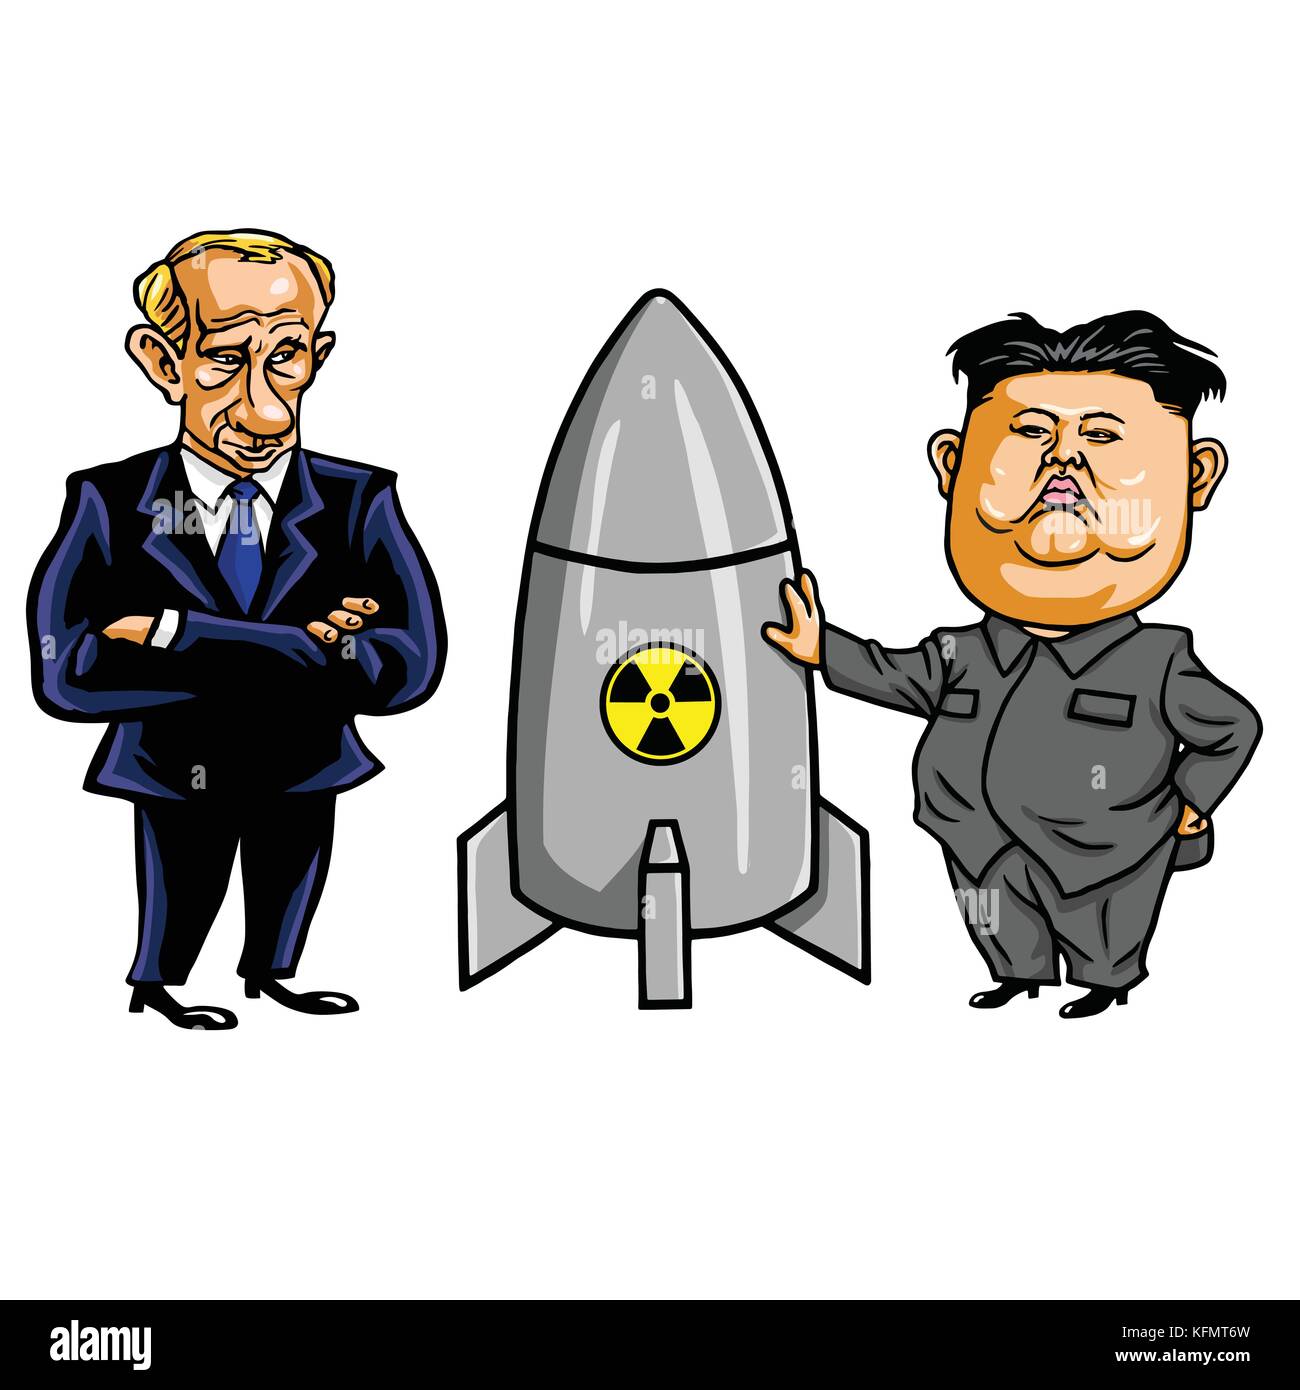 Kim Jong-un und nukleare Waffe mit Wladimir Putin. Vektor Cartoon Illustration. 31. Oktober 2017 Stock Vektor